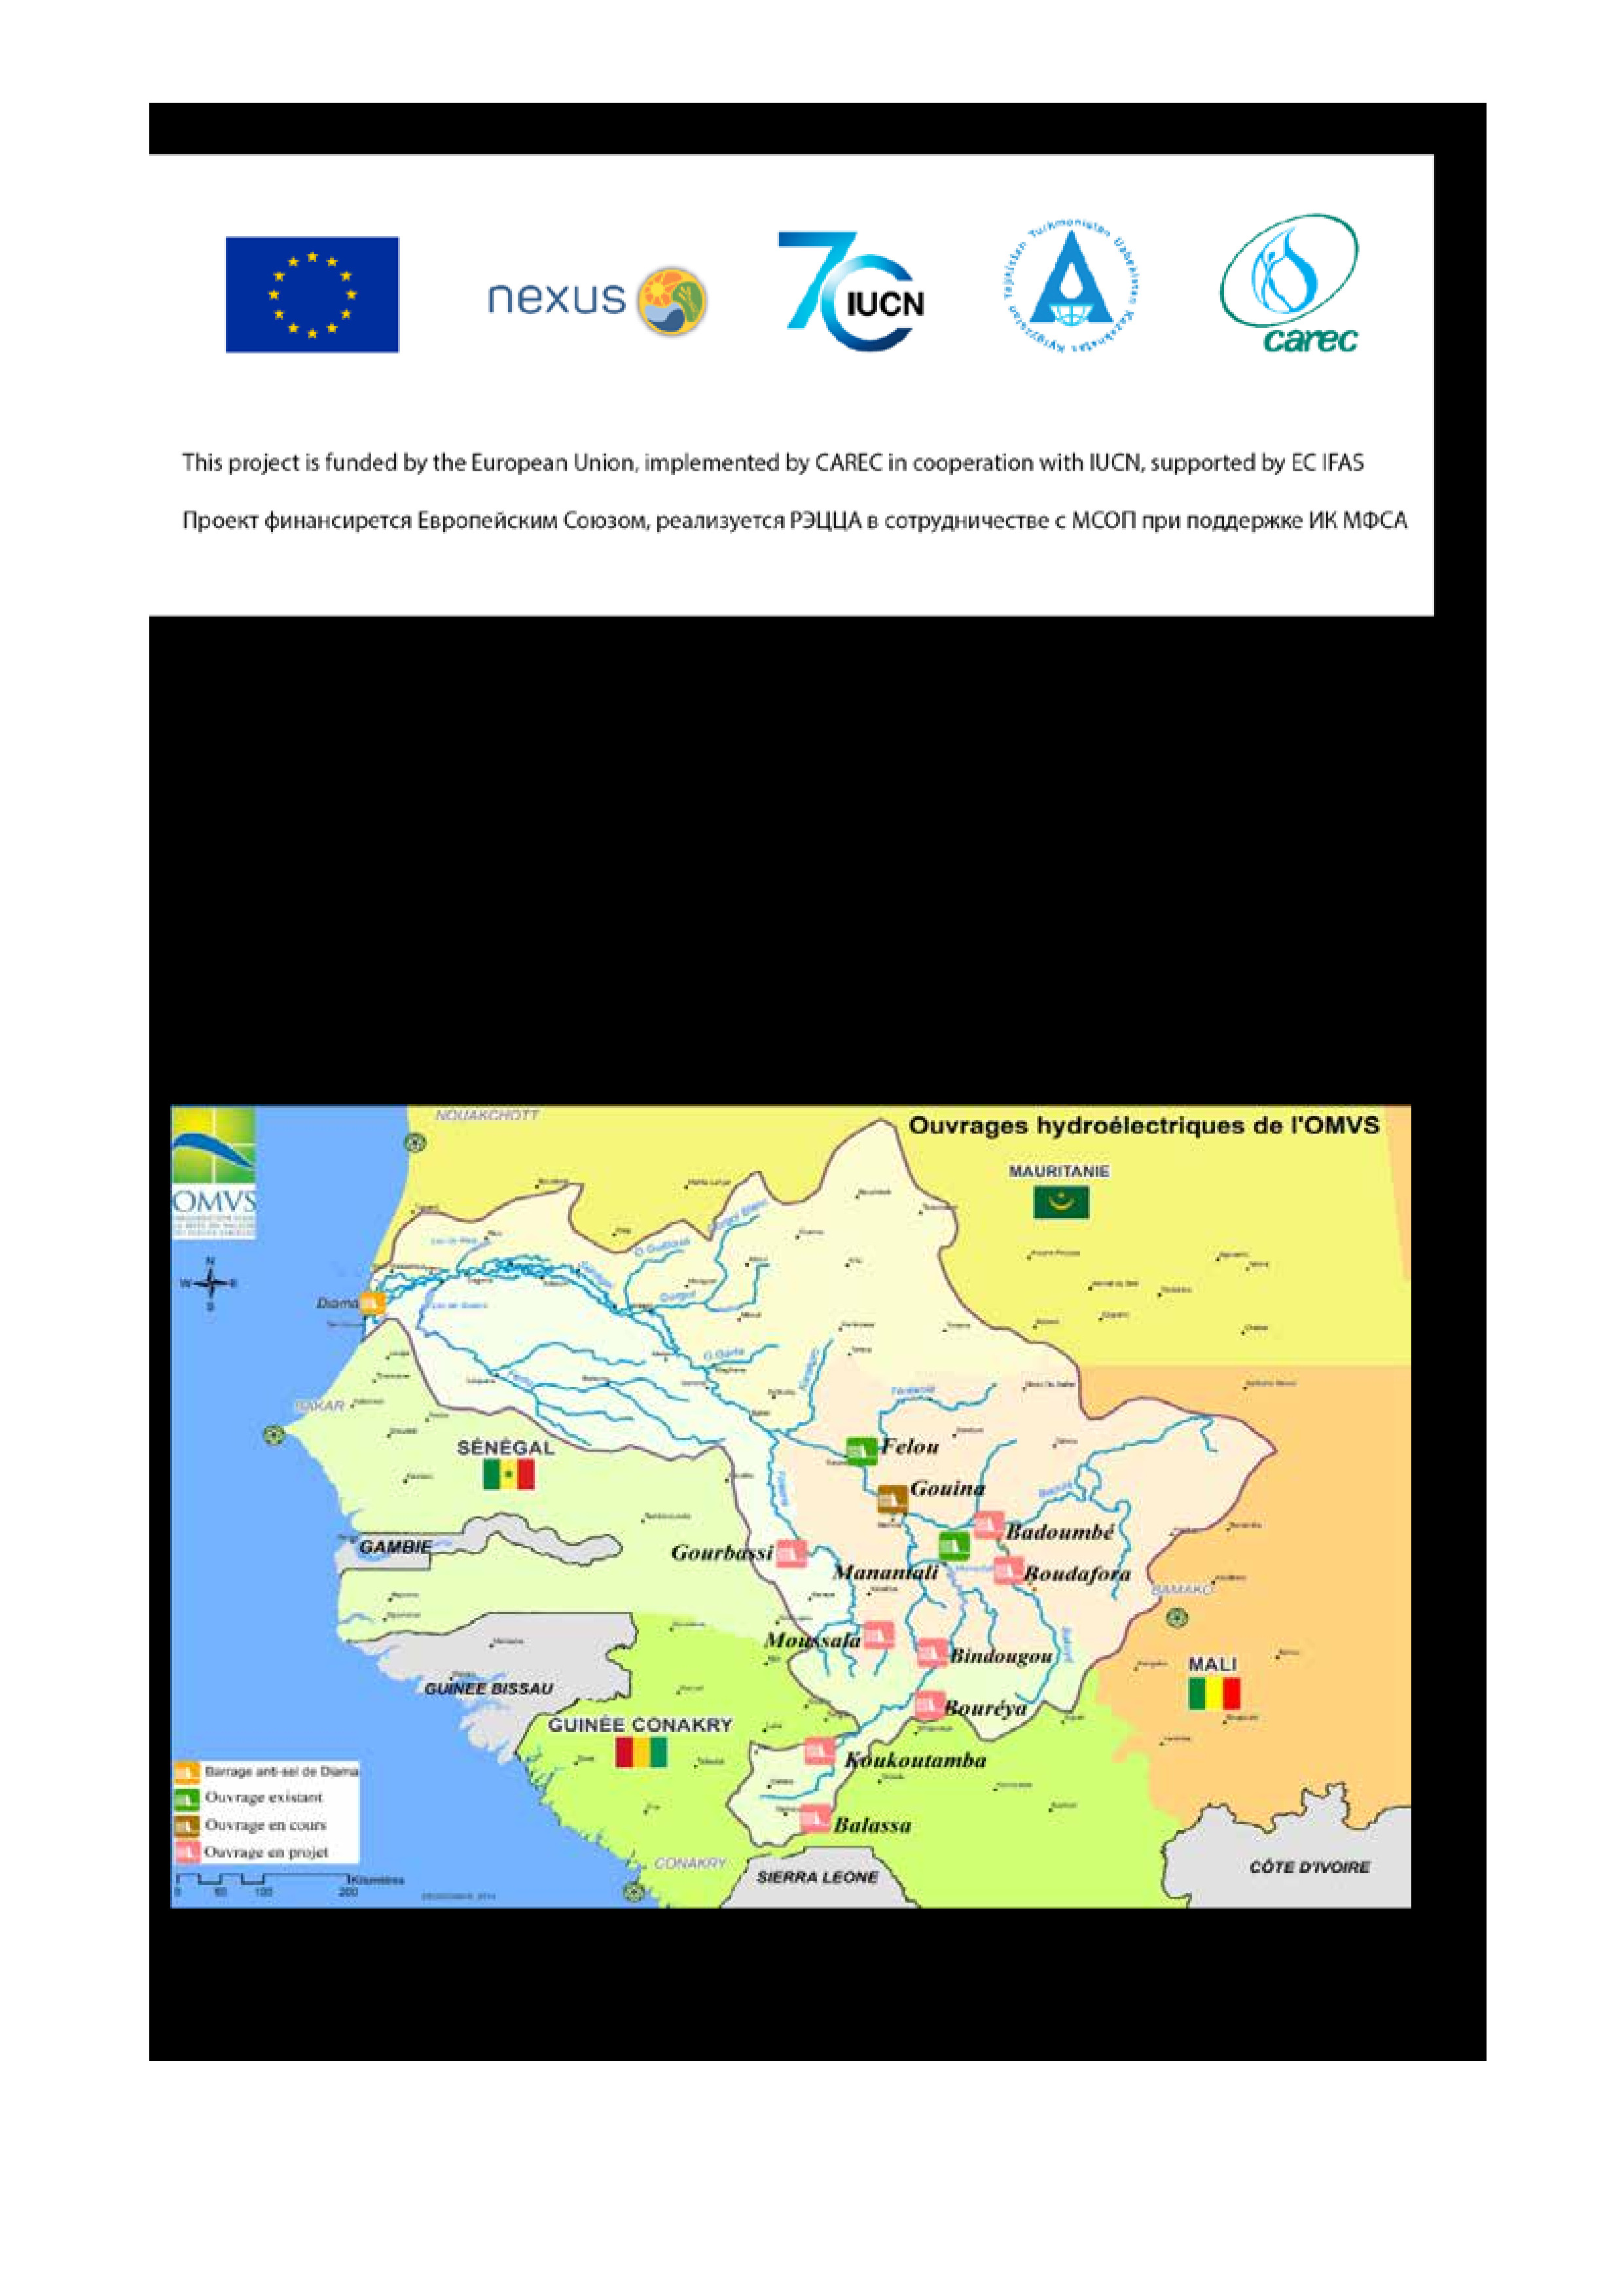 Senegal River basin case study, May 2018